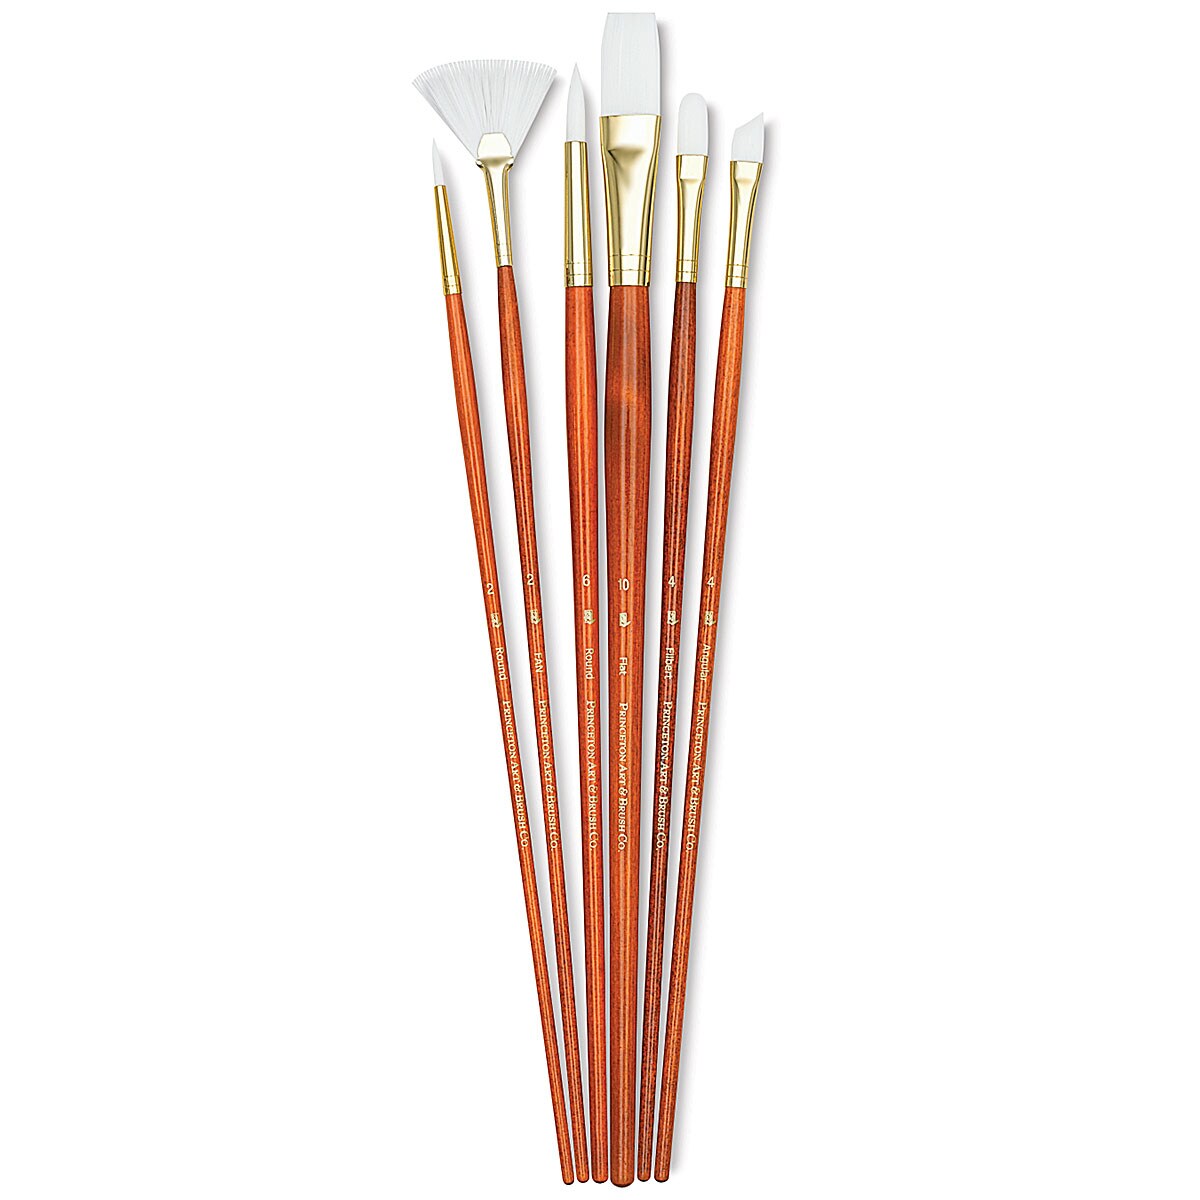 Princeton Real Value Brush Set - 9156, White Taklon, Long Handle, Set of 6